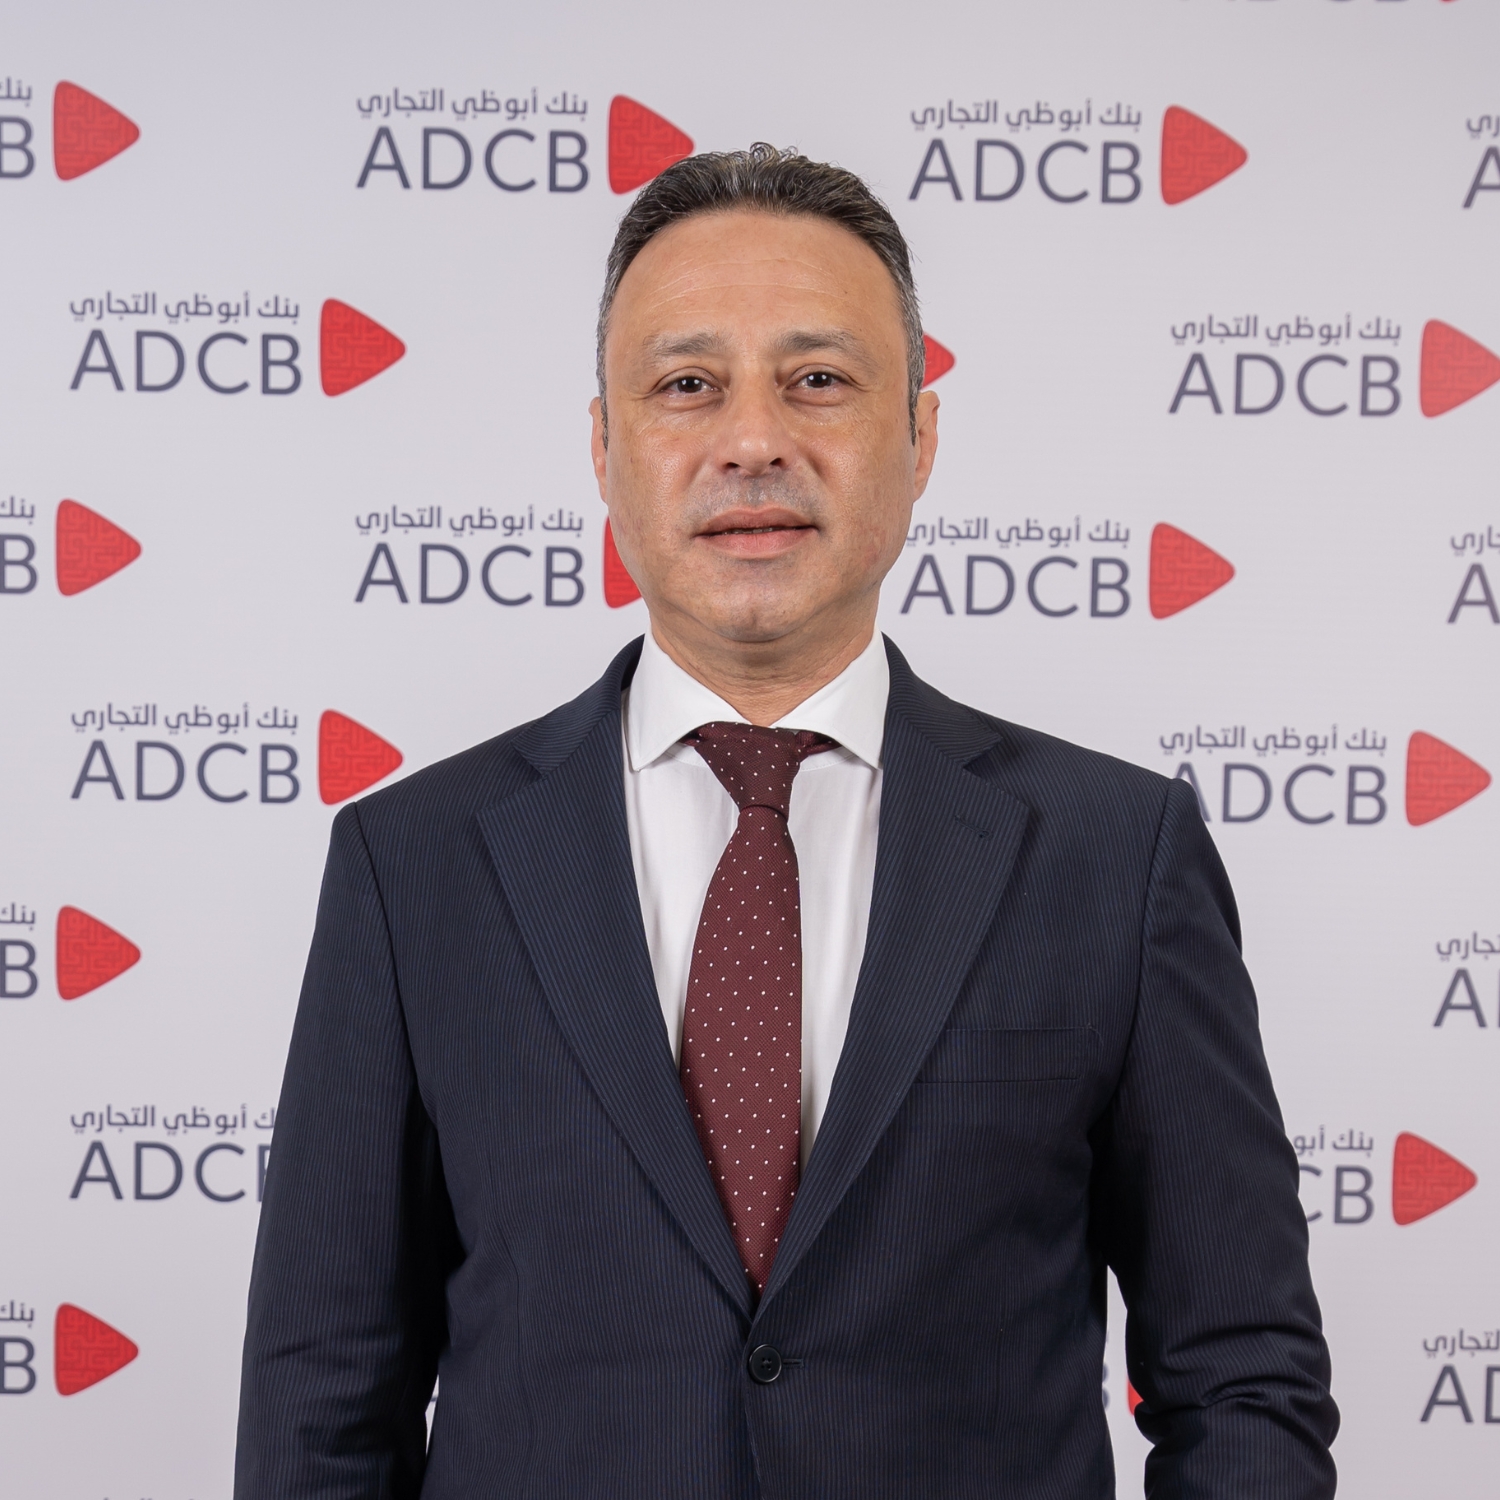 Mr. Hisham Abbas _ ADCB Egypt Member of the Board of Directors (Executive)